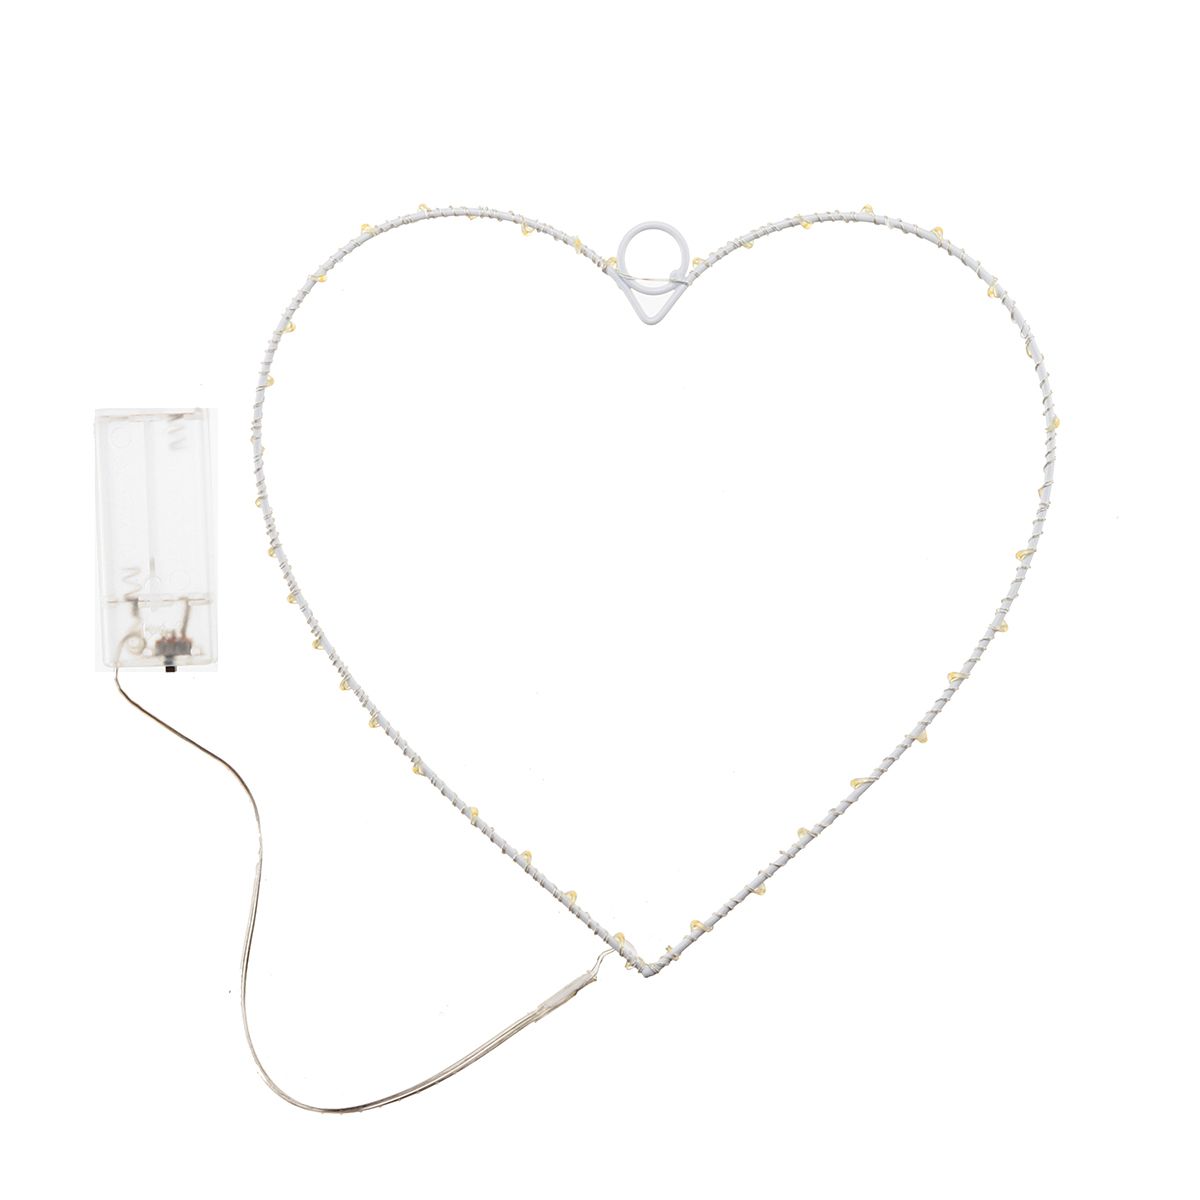 LED-25x25-Shaped-Hanging-Decorations-Lights-Illuminative-Heart-Star-Fairy-Battery-Powered-1635909